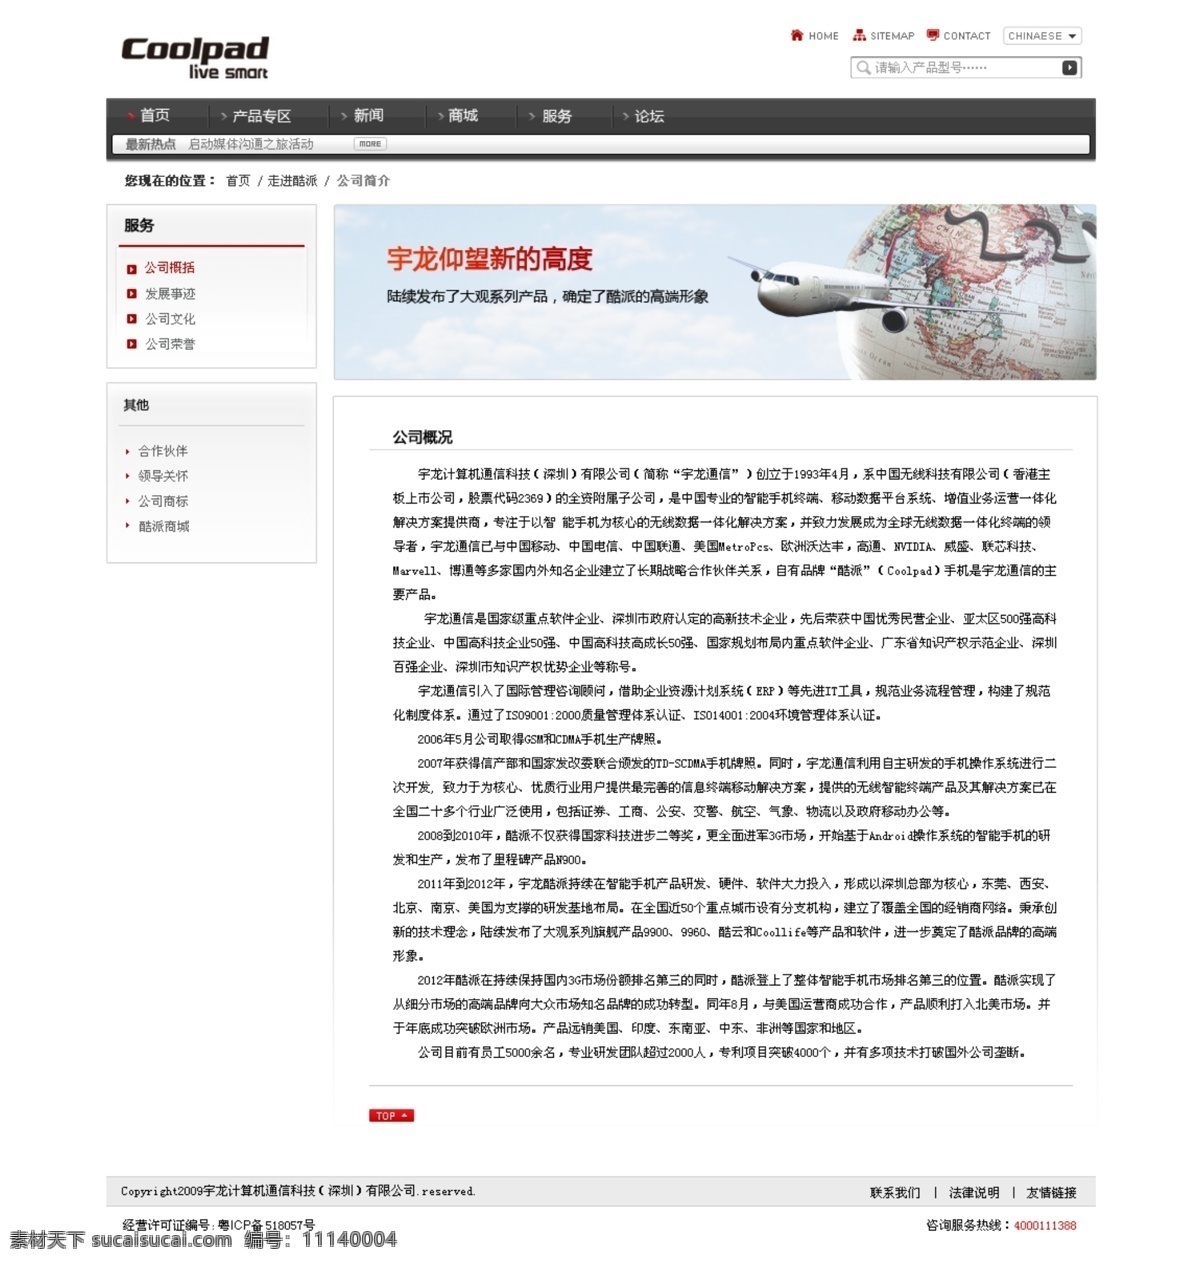 3d设计模型 关于我们 企业简介 网页模板 源文件 展示模型 中文模板 中文网站 关于 我们 模板下载 原文件库 网页素材